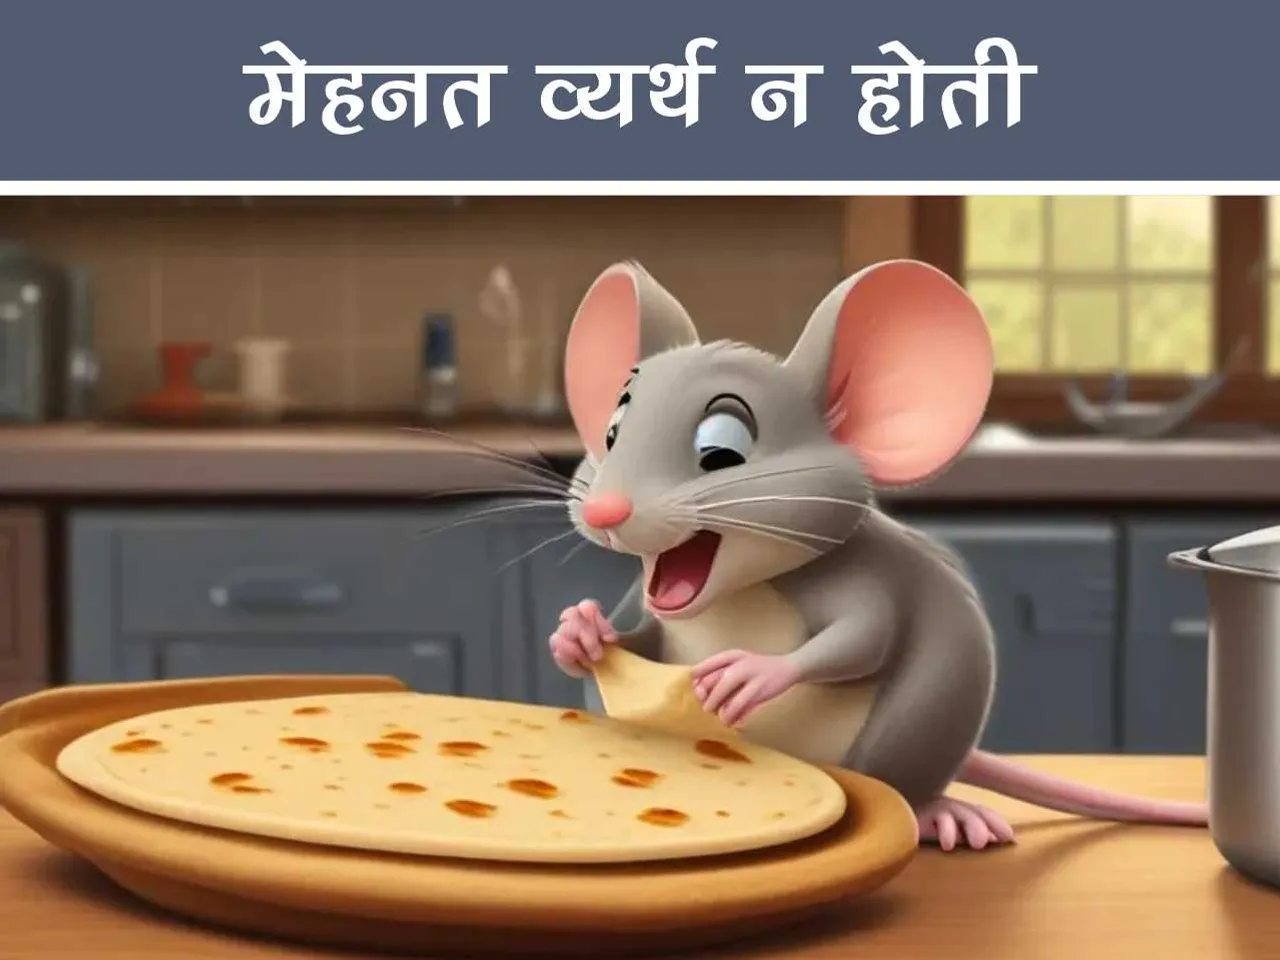 Mouse eating chapati cartoon image